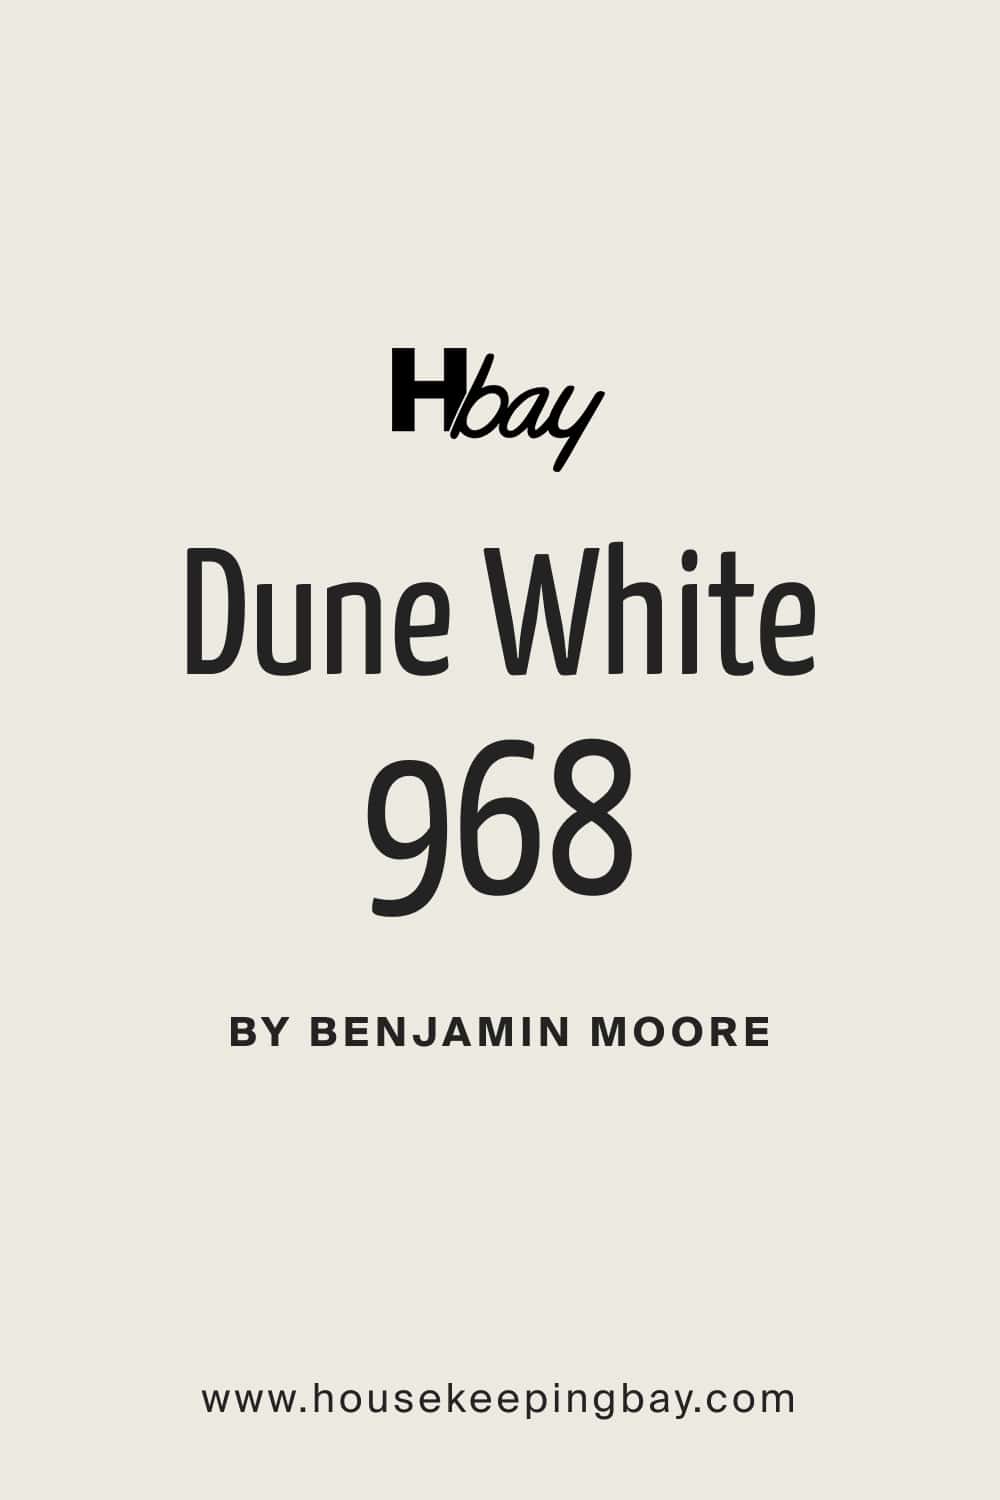 Dune White 968 by Benjamin Moore